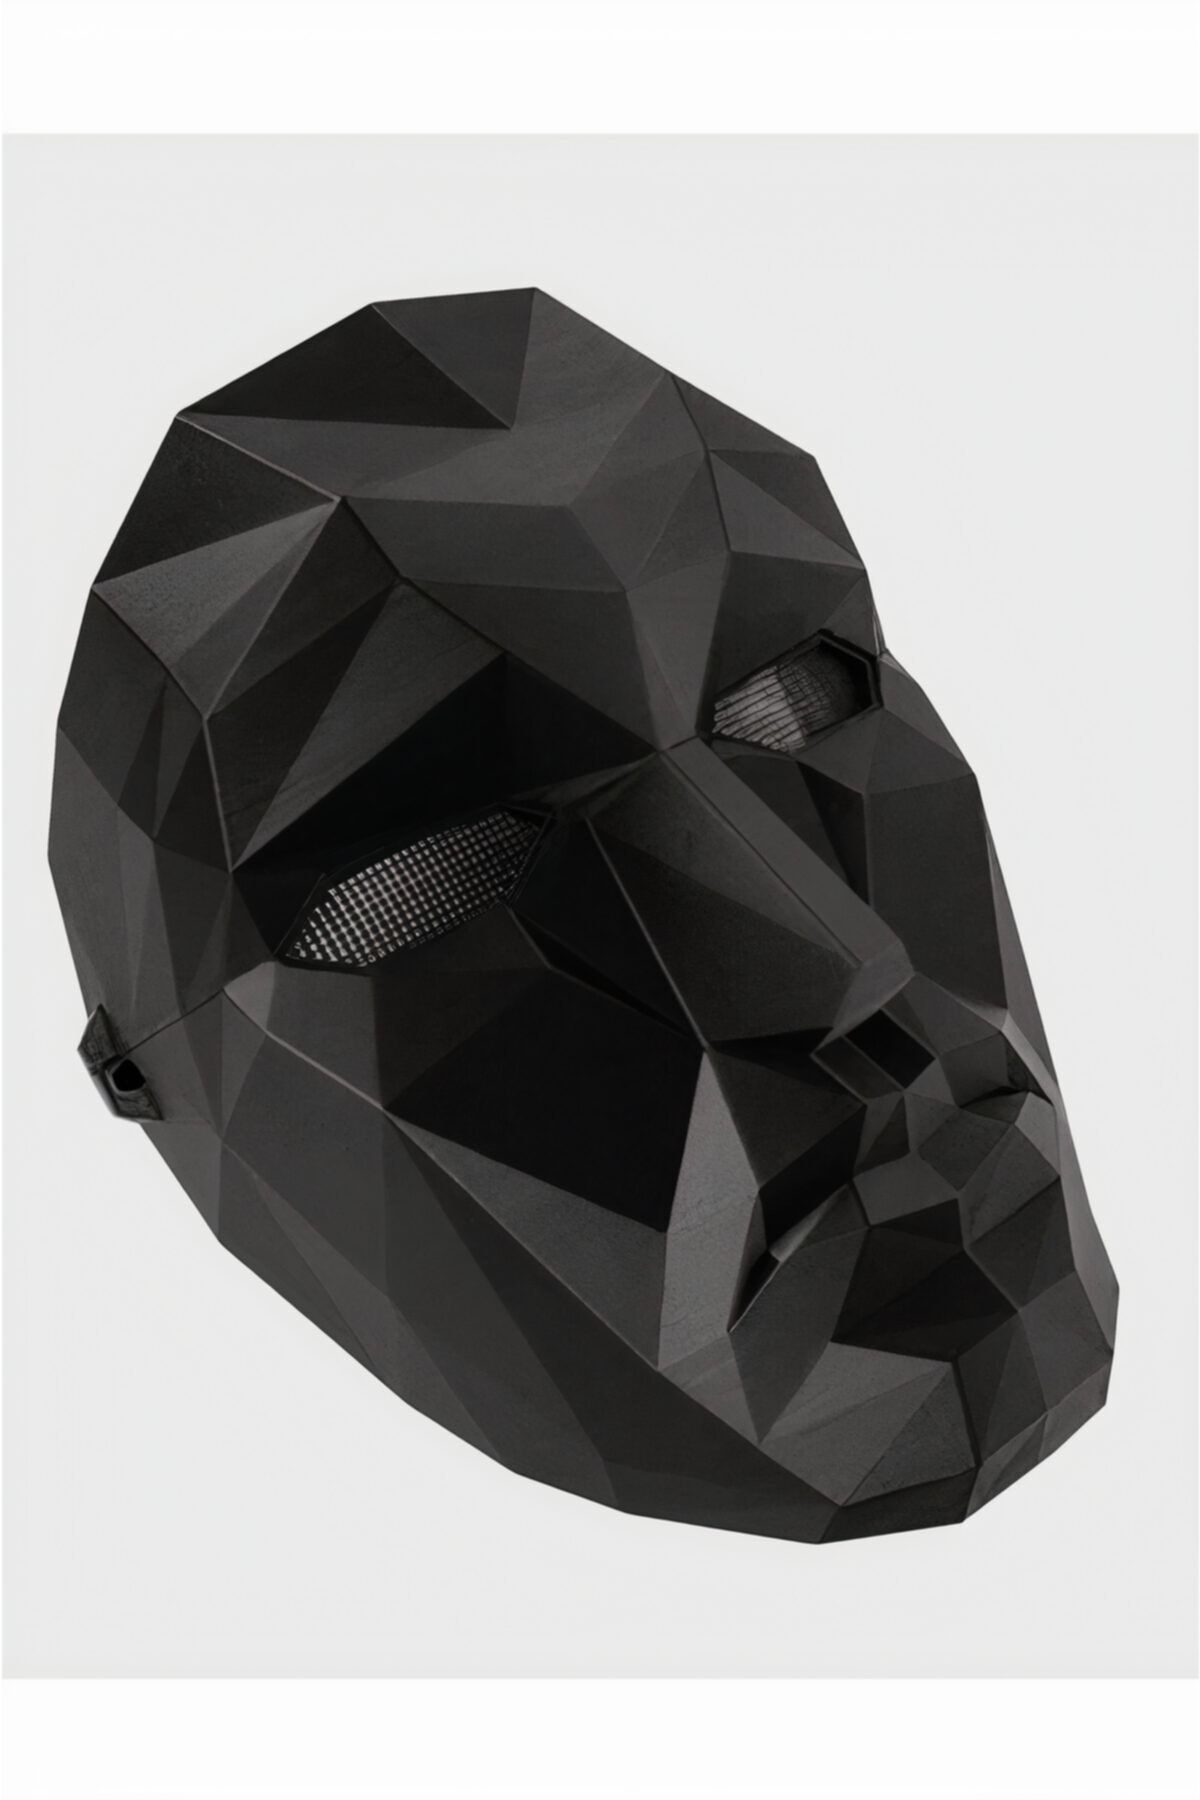 Mephisto 3D Yazıcı Yönetici Maske 3d